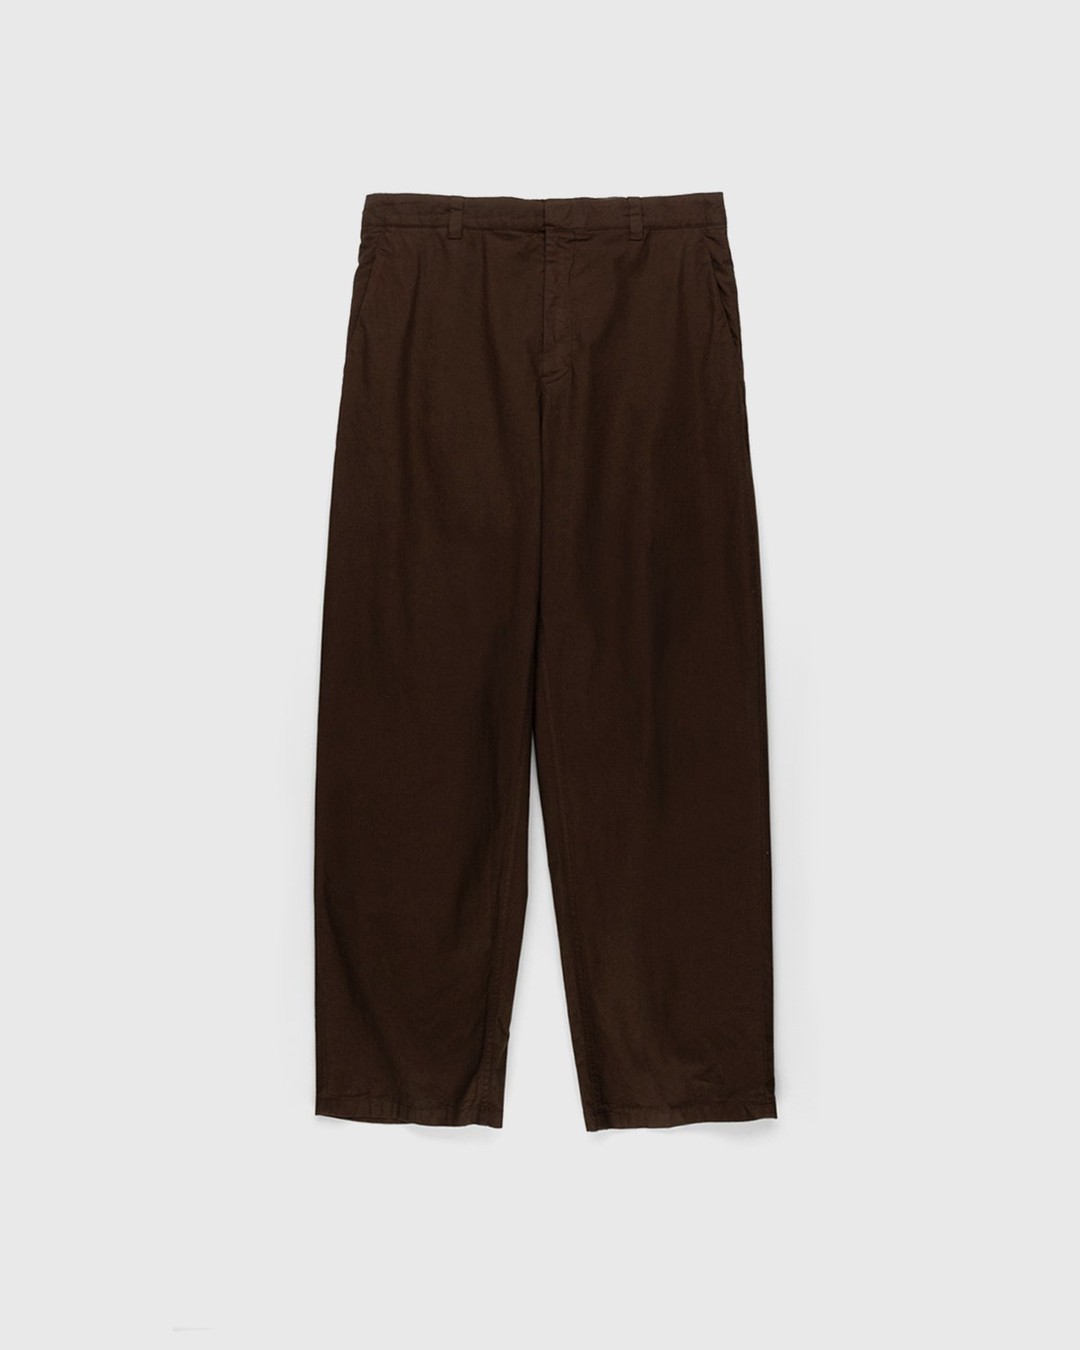 Jil Sander – Cotton Trousers Dark Brown - Pants - Brown - Image 2